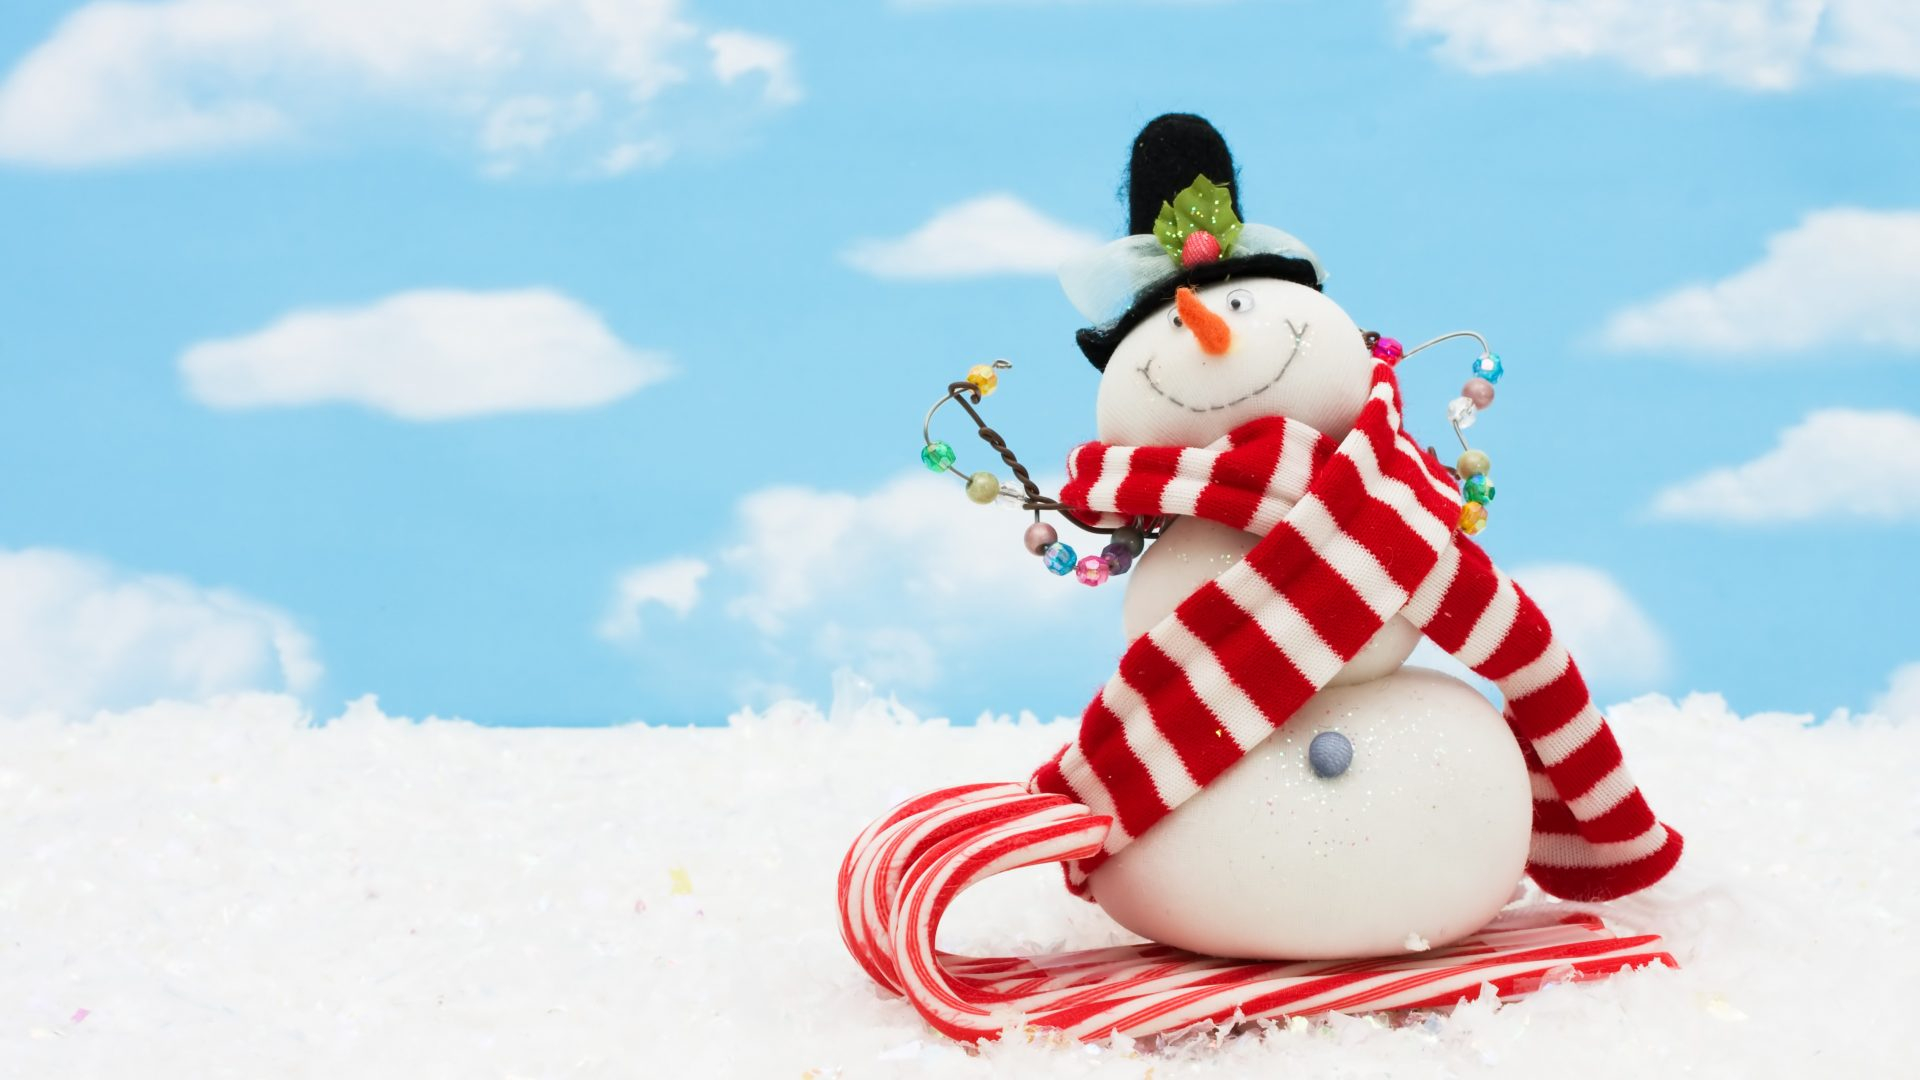 1920x1080 winter-cute-snowman-christmas-splendor-time-magic-merry-snow-xmas-wallpaper-mac-desktop- : Free Download, Borrow, and Streaming : Internet Archive